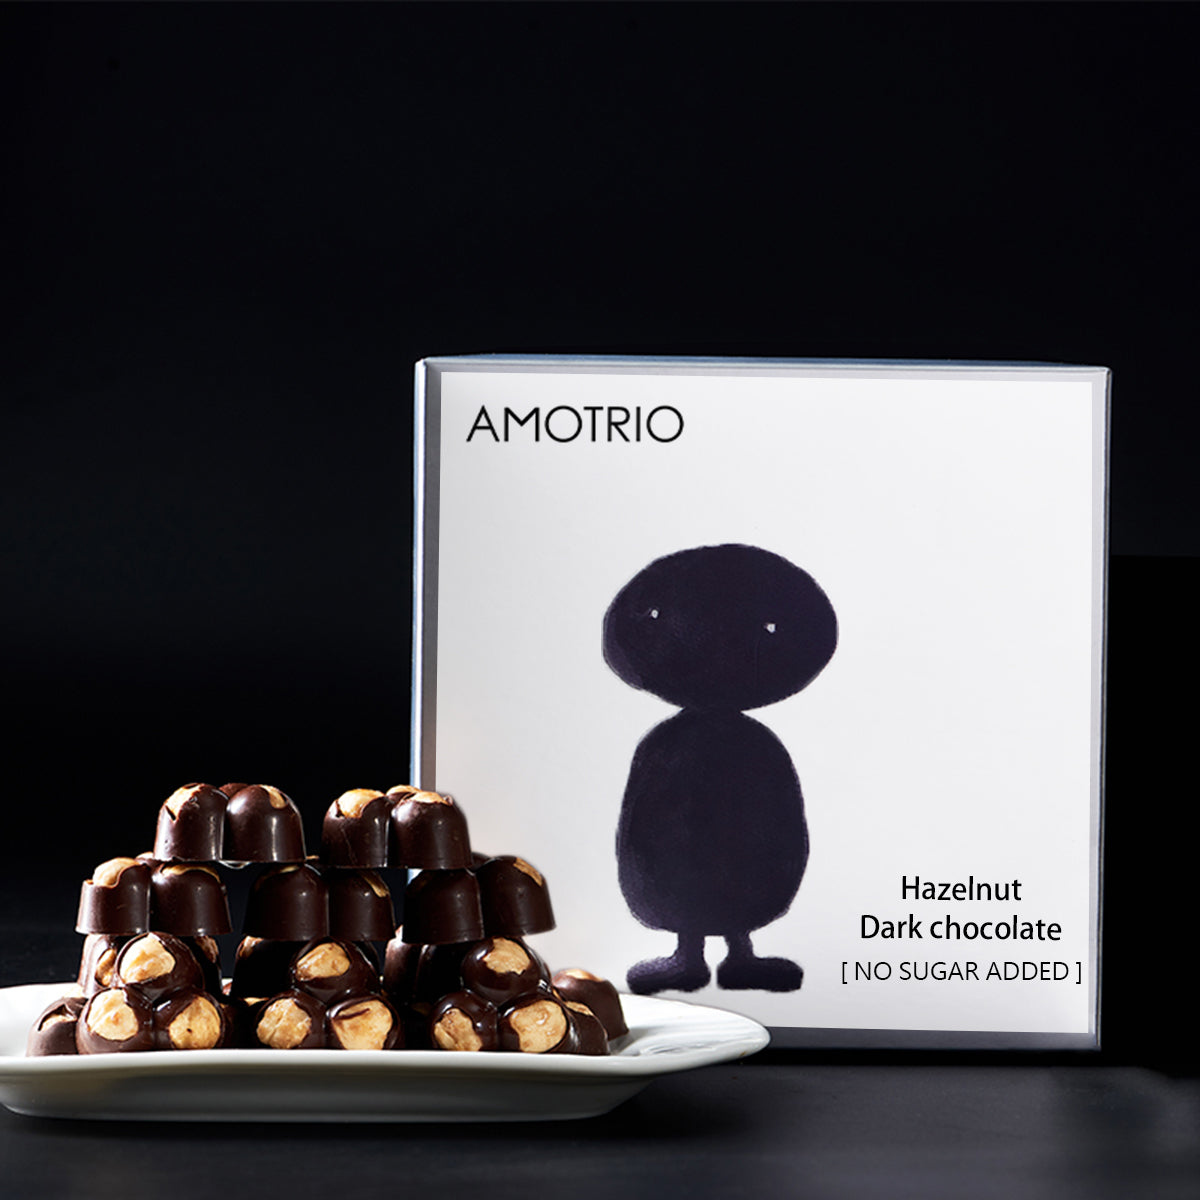 Amotrio hazelnut maltitol sweetened chocolate no sugar added